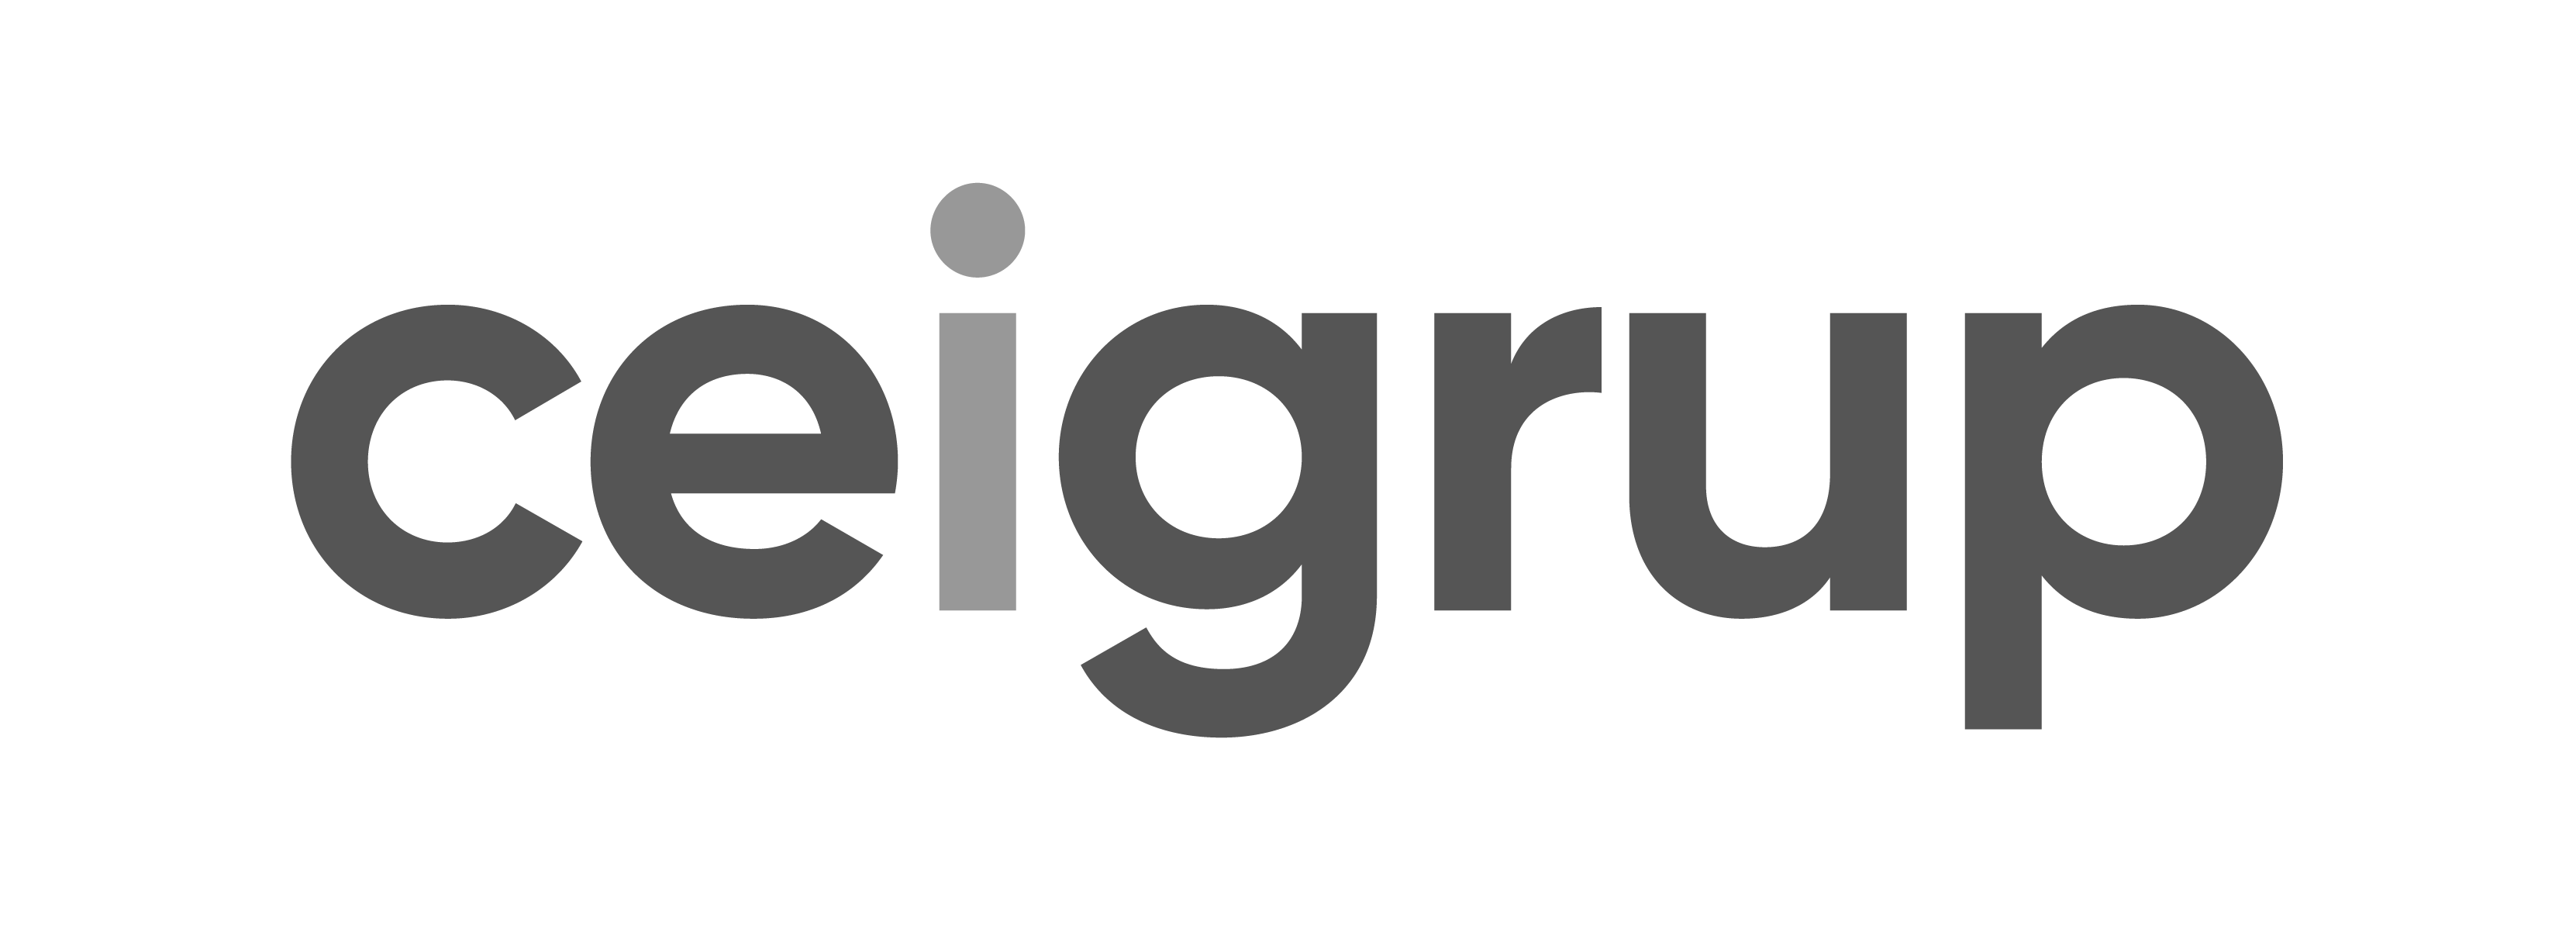 Logo Ceigrup